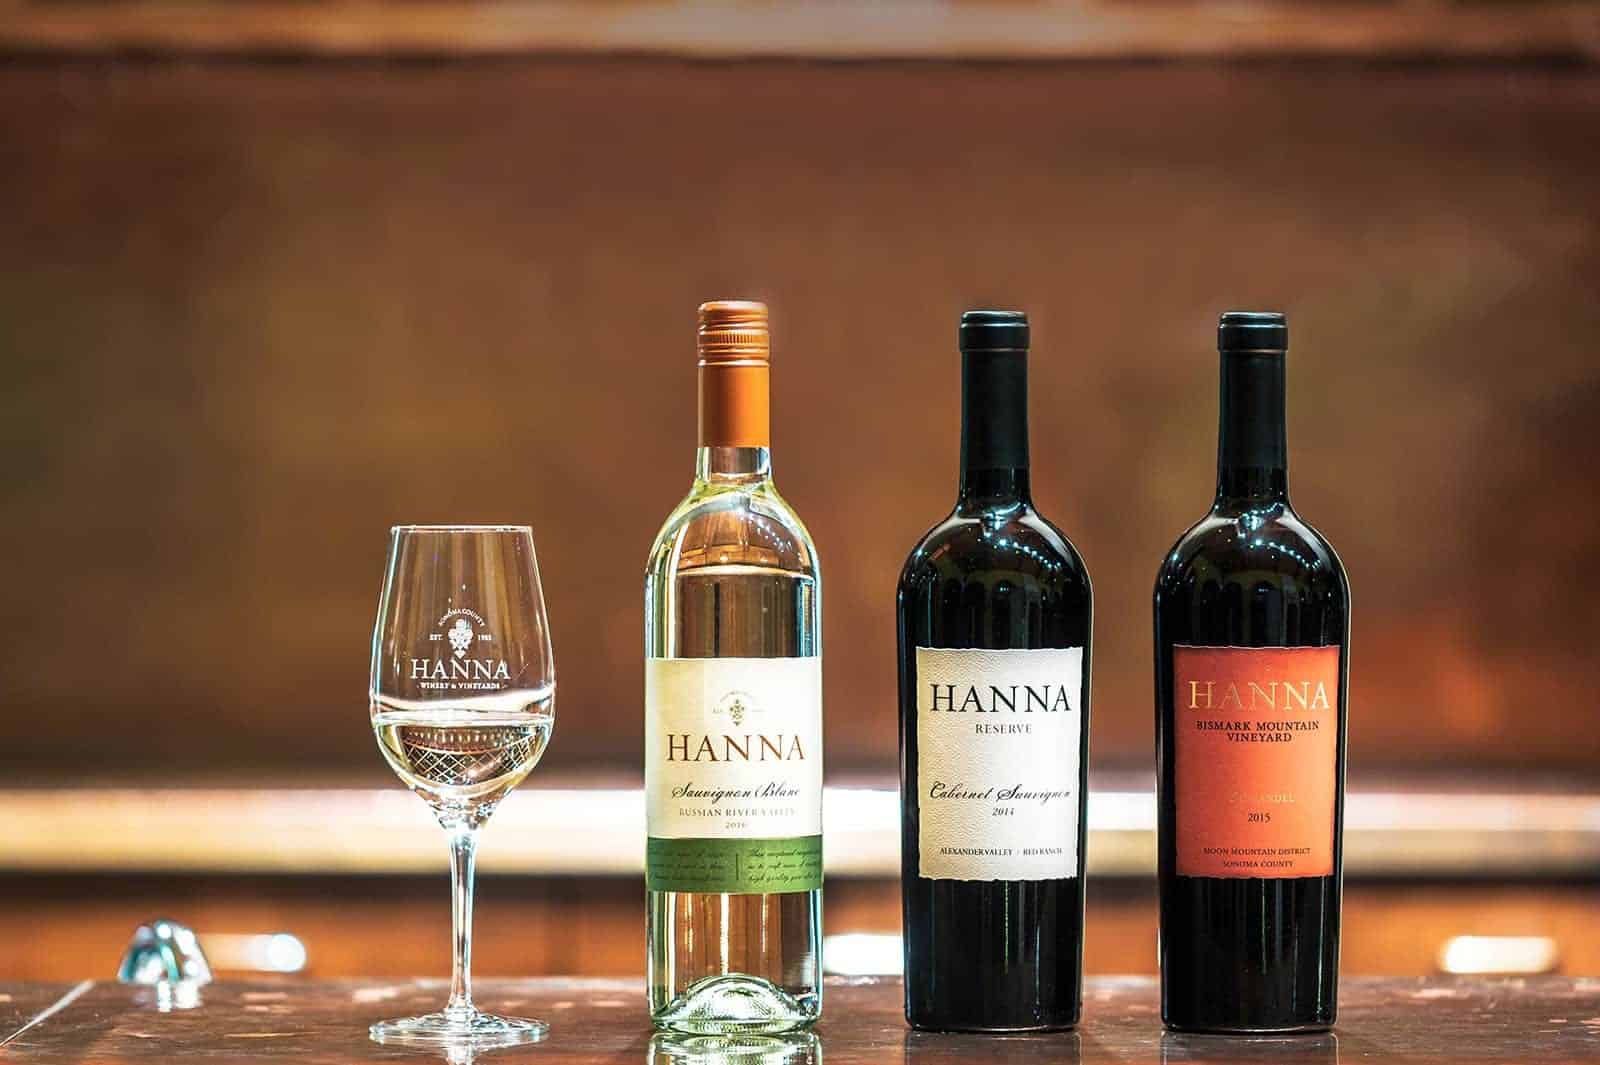 Hanna Winery – Alexander Valley Hospitality Center